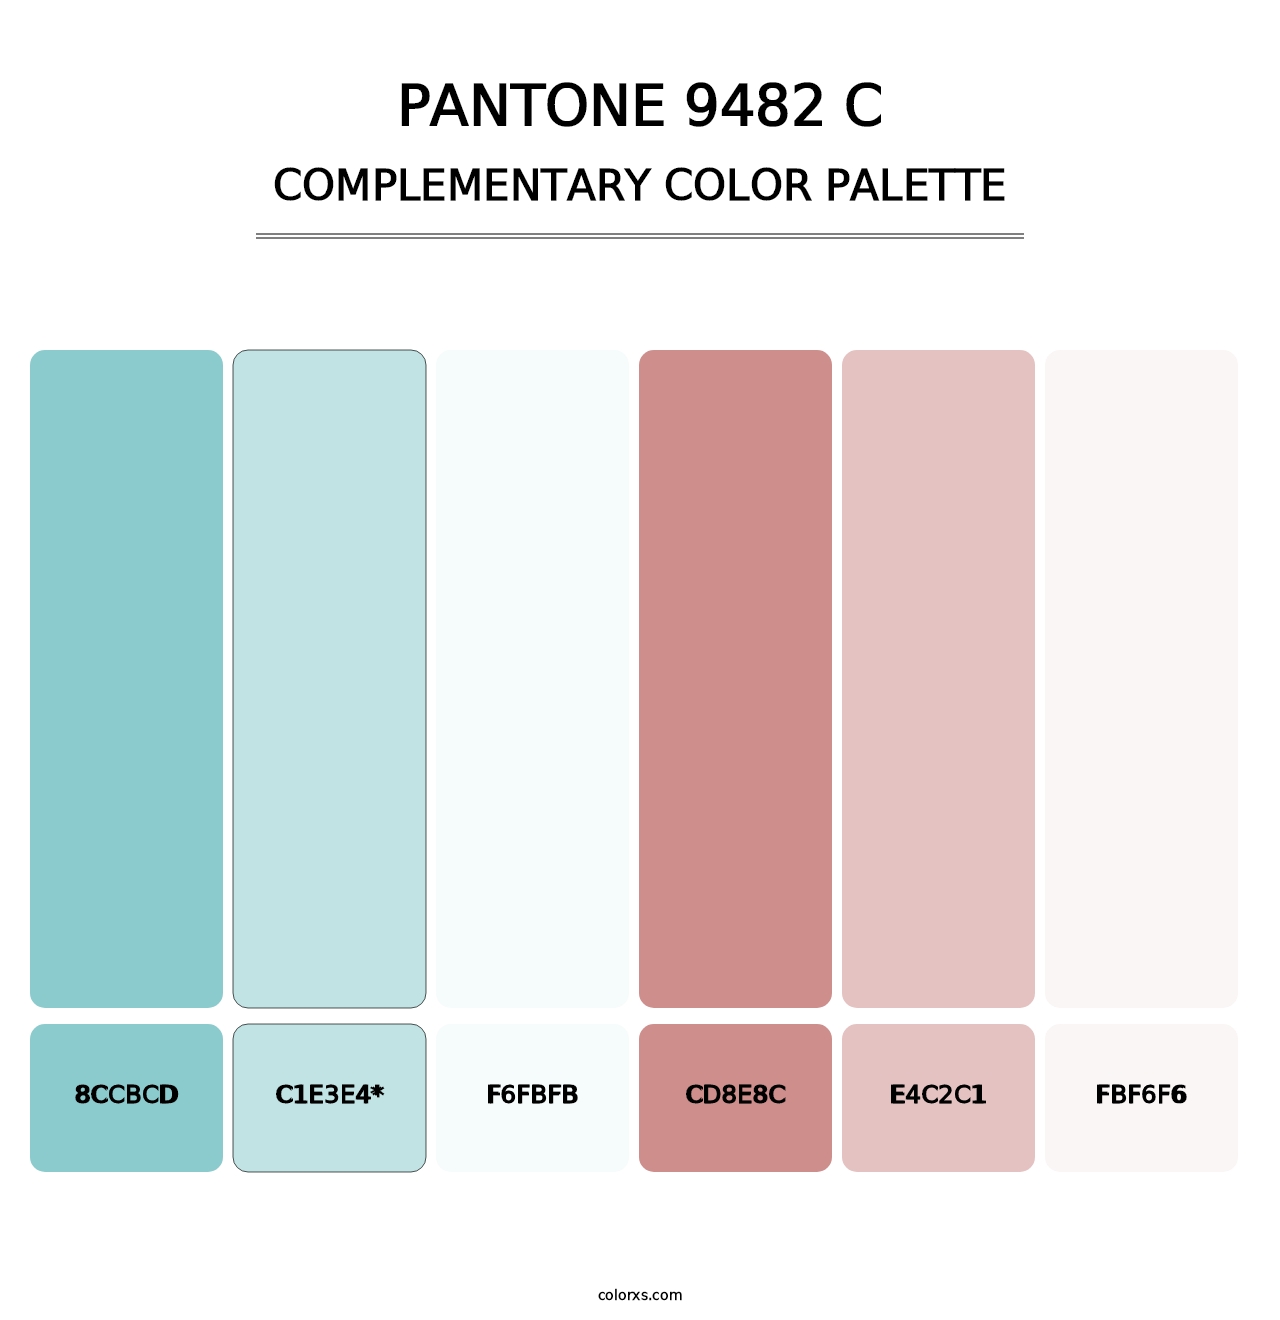 PANTONE 9482 C - Complementary Color Palette